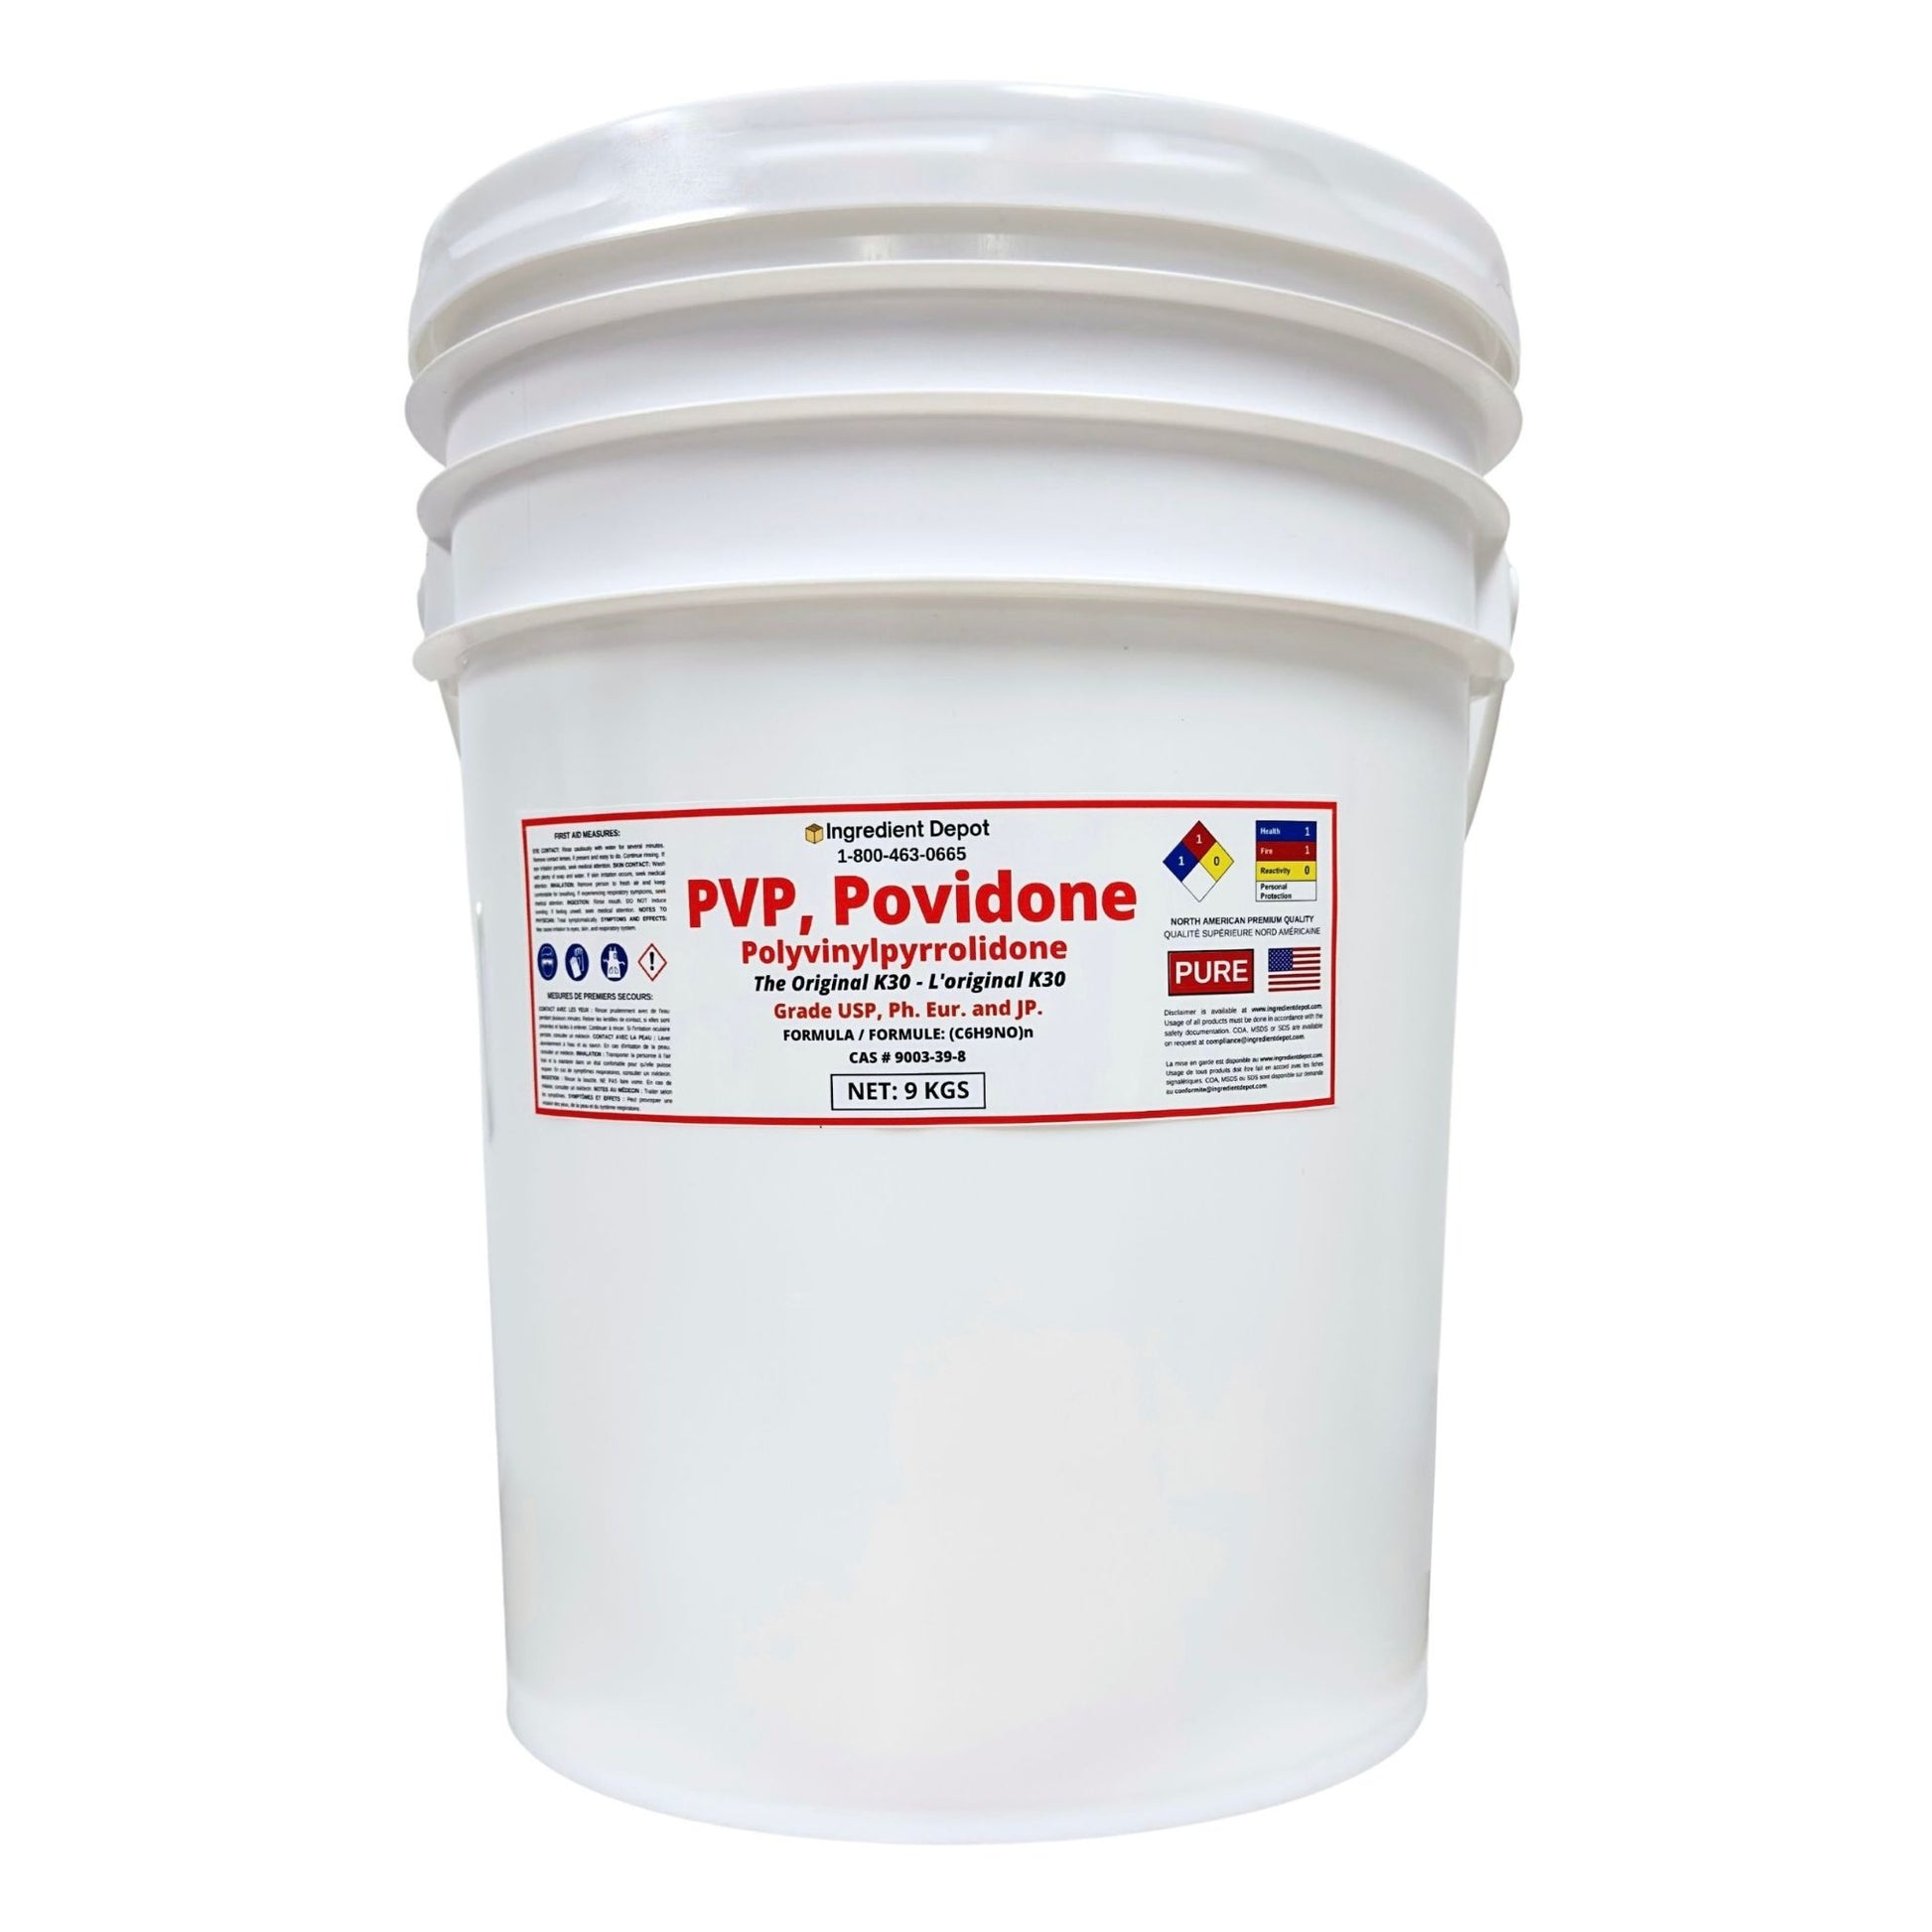 PVP Original K30, Povidone, Polyvinylpyrrolidone 9 kgs